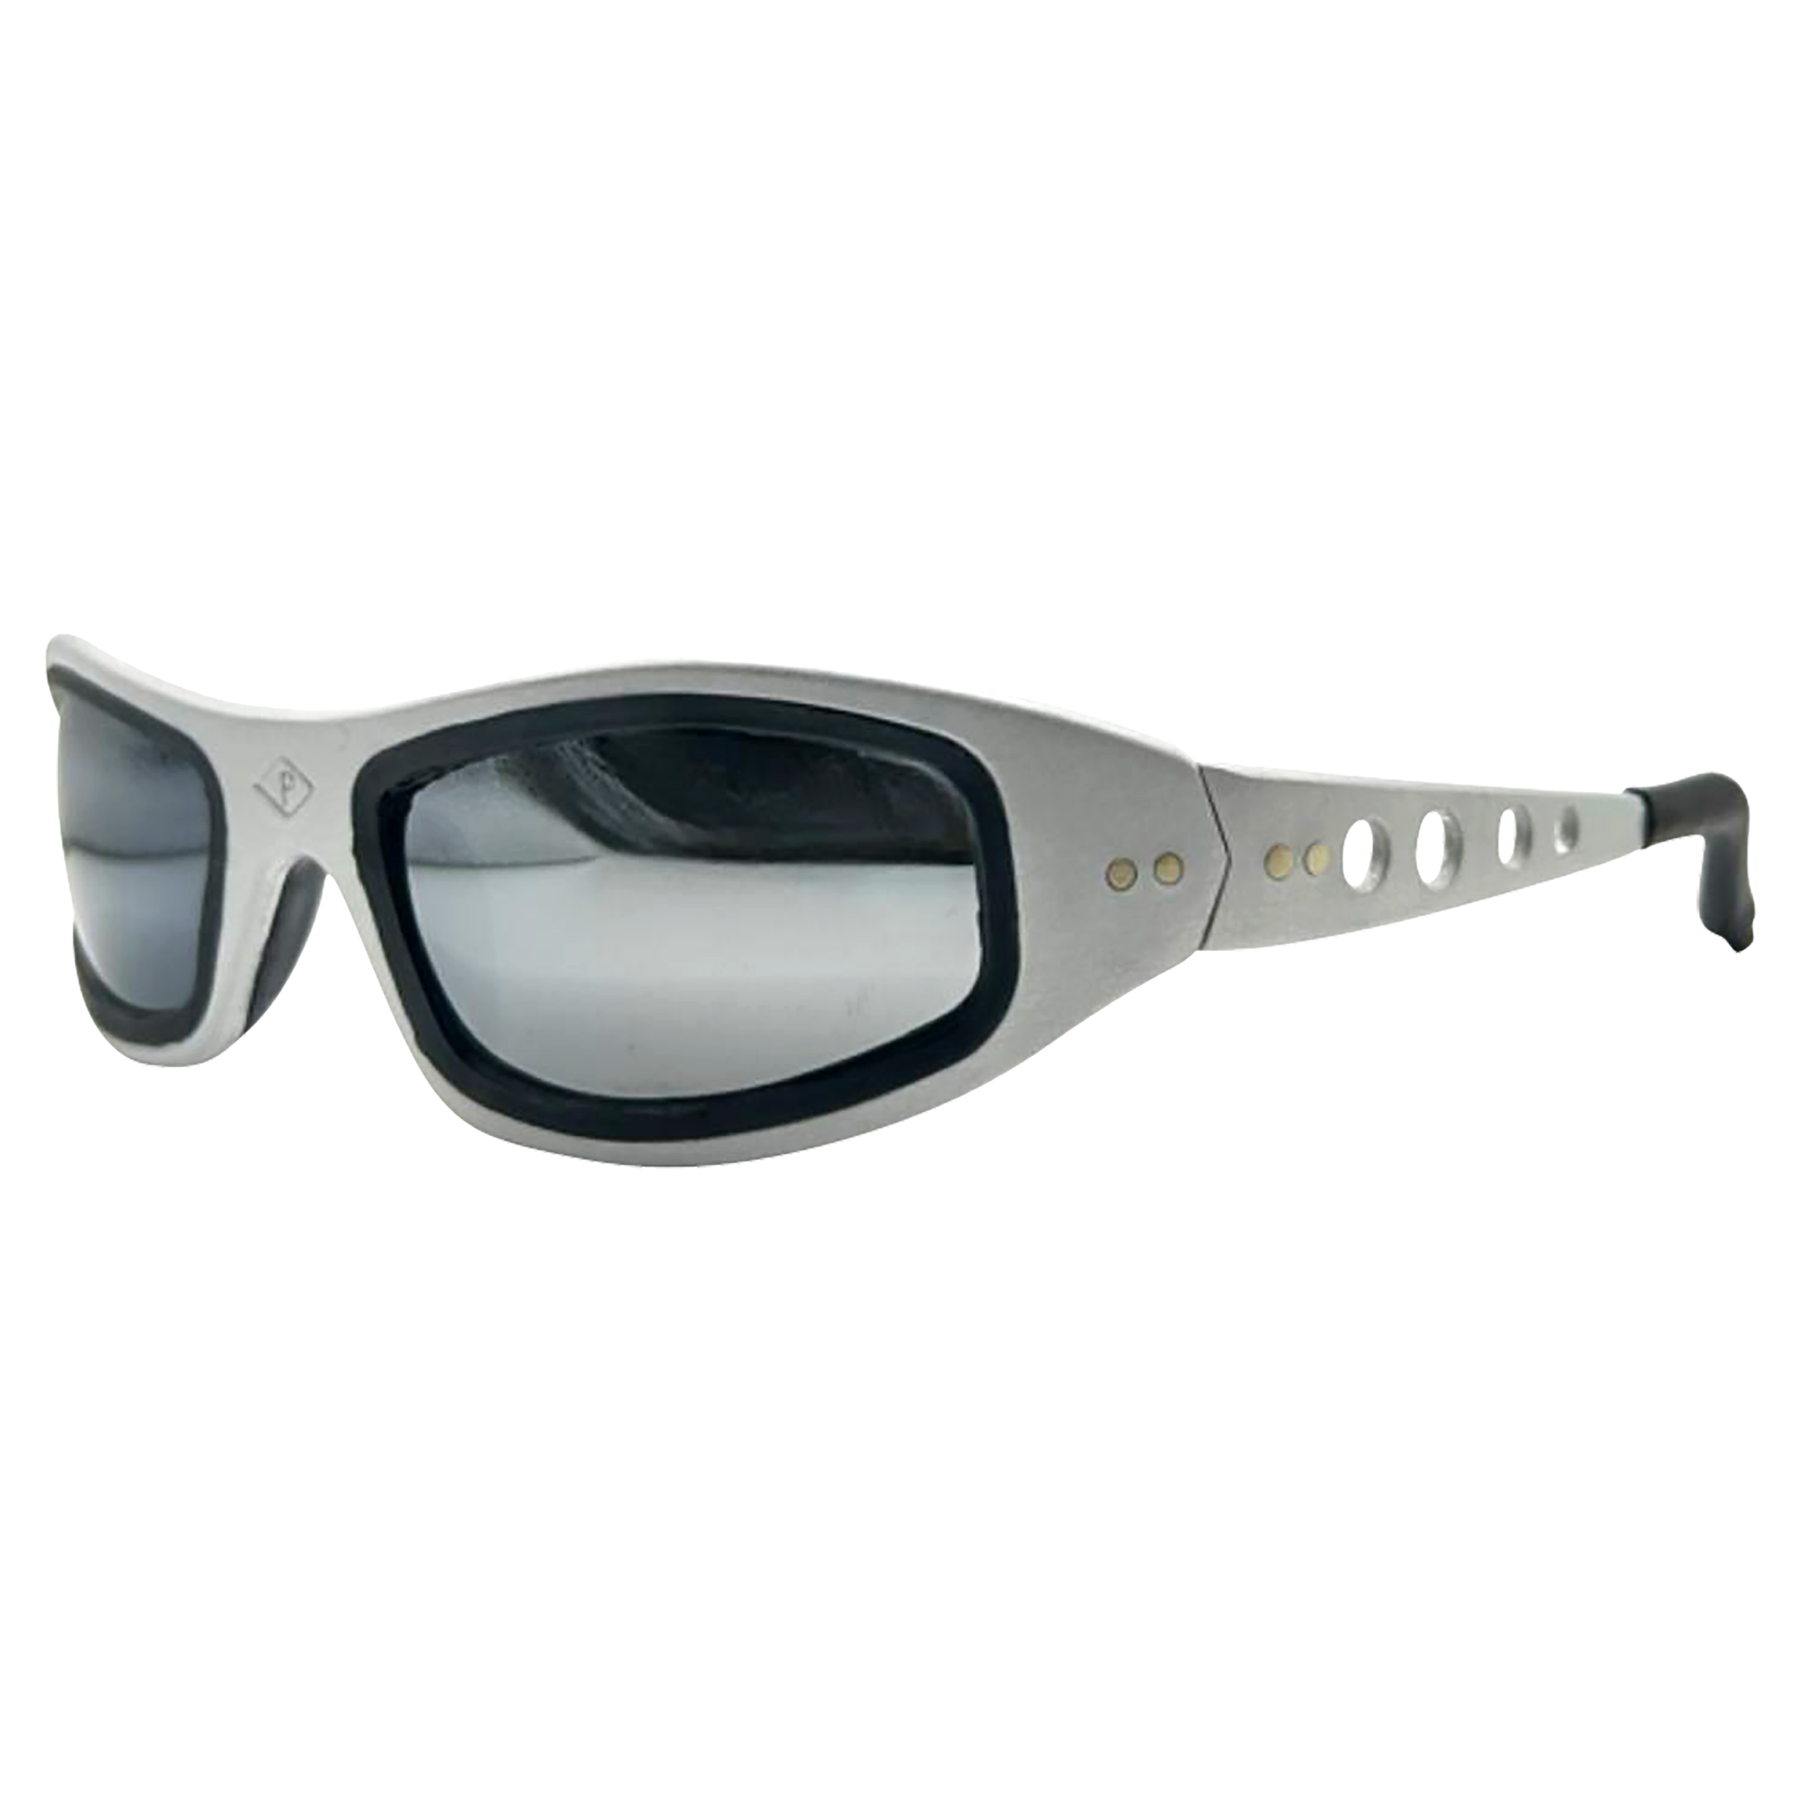 PRESSURE Square Futuristic Wraparound Sunglasses